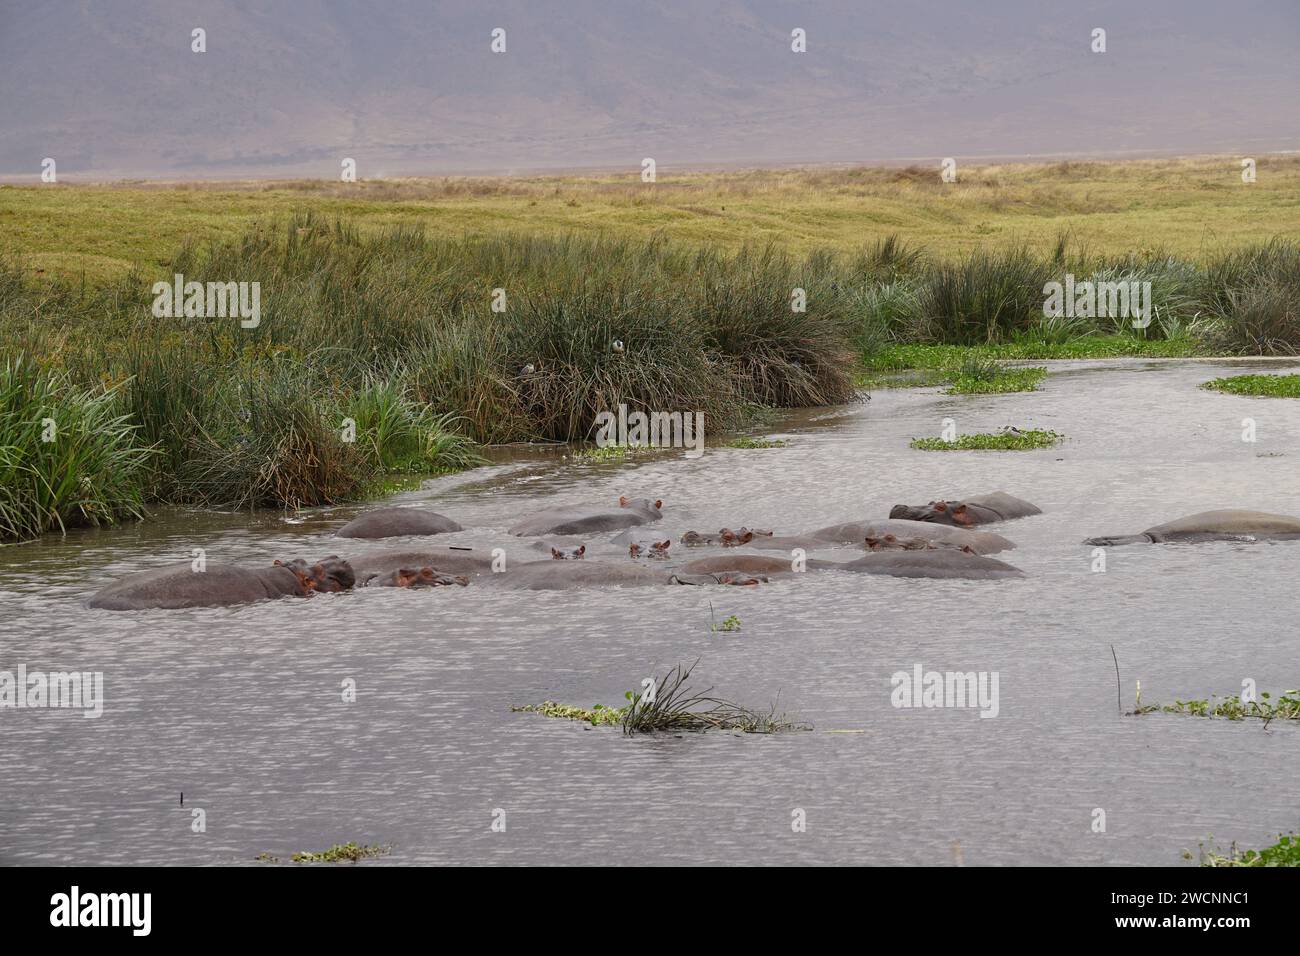 herd of hippos in pond Stock Photo